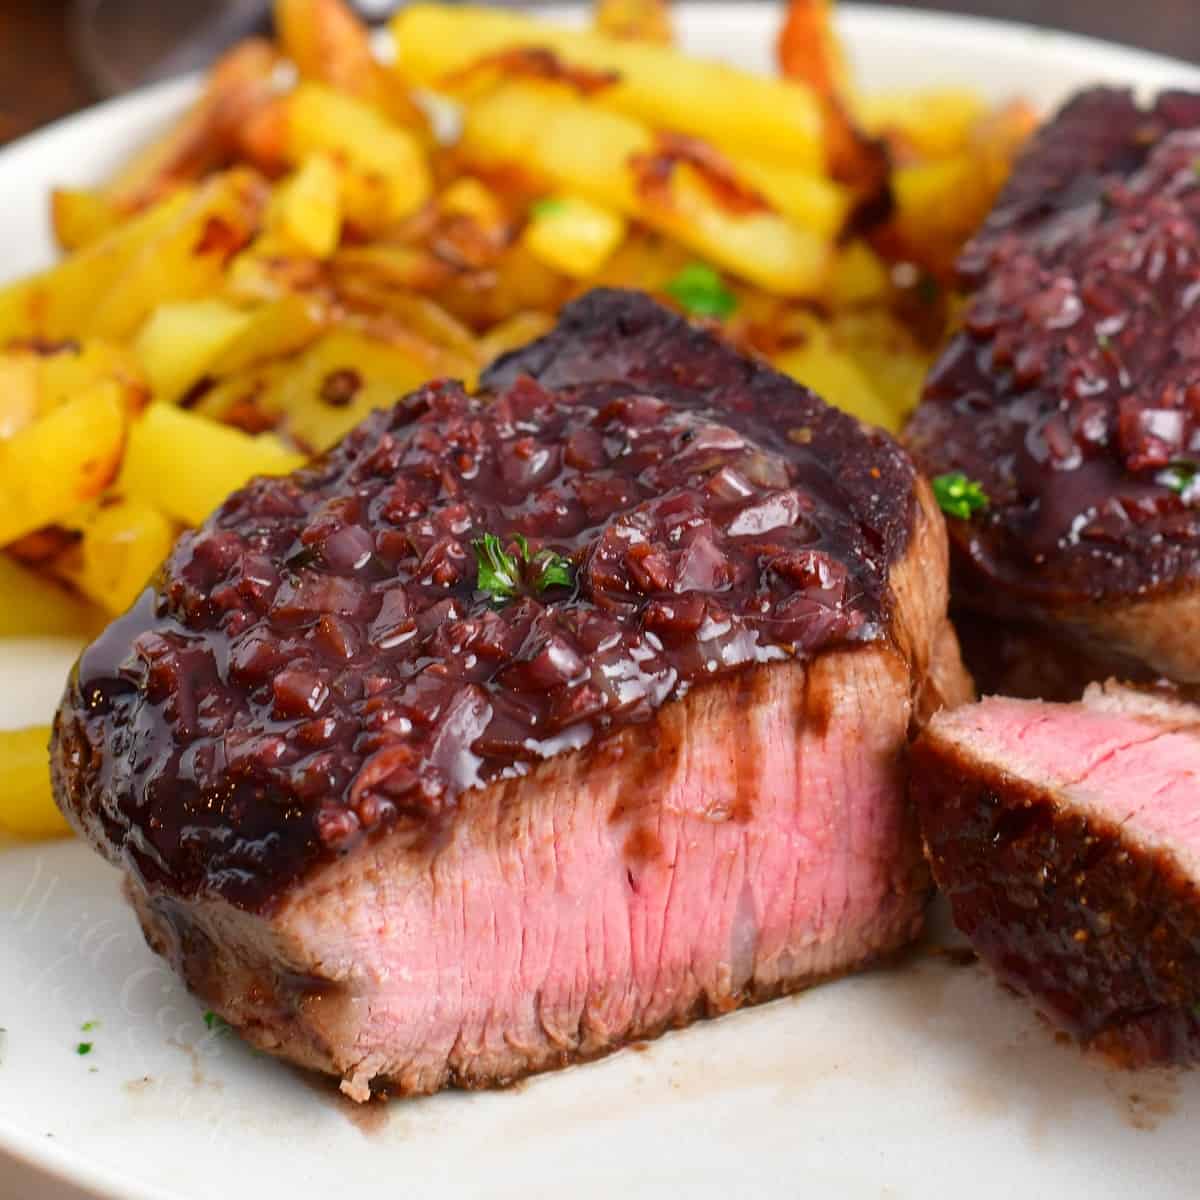 https://www.willcookforsmiles.com/wp-content/uploads/2021/03/Red-Wine-Steak-Sauce-sq.jpg